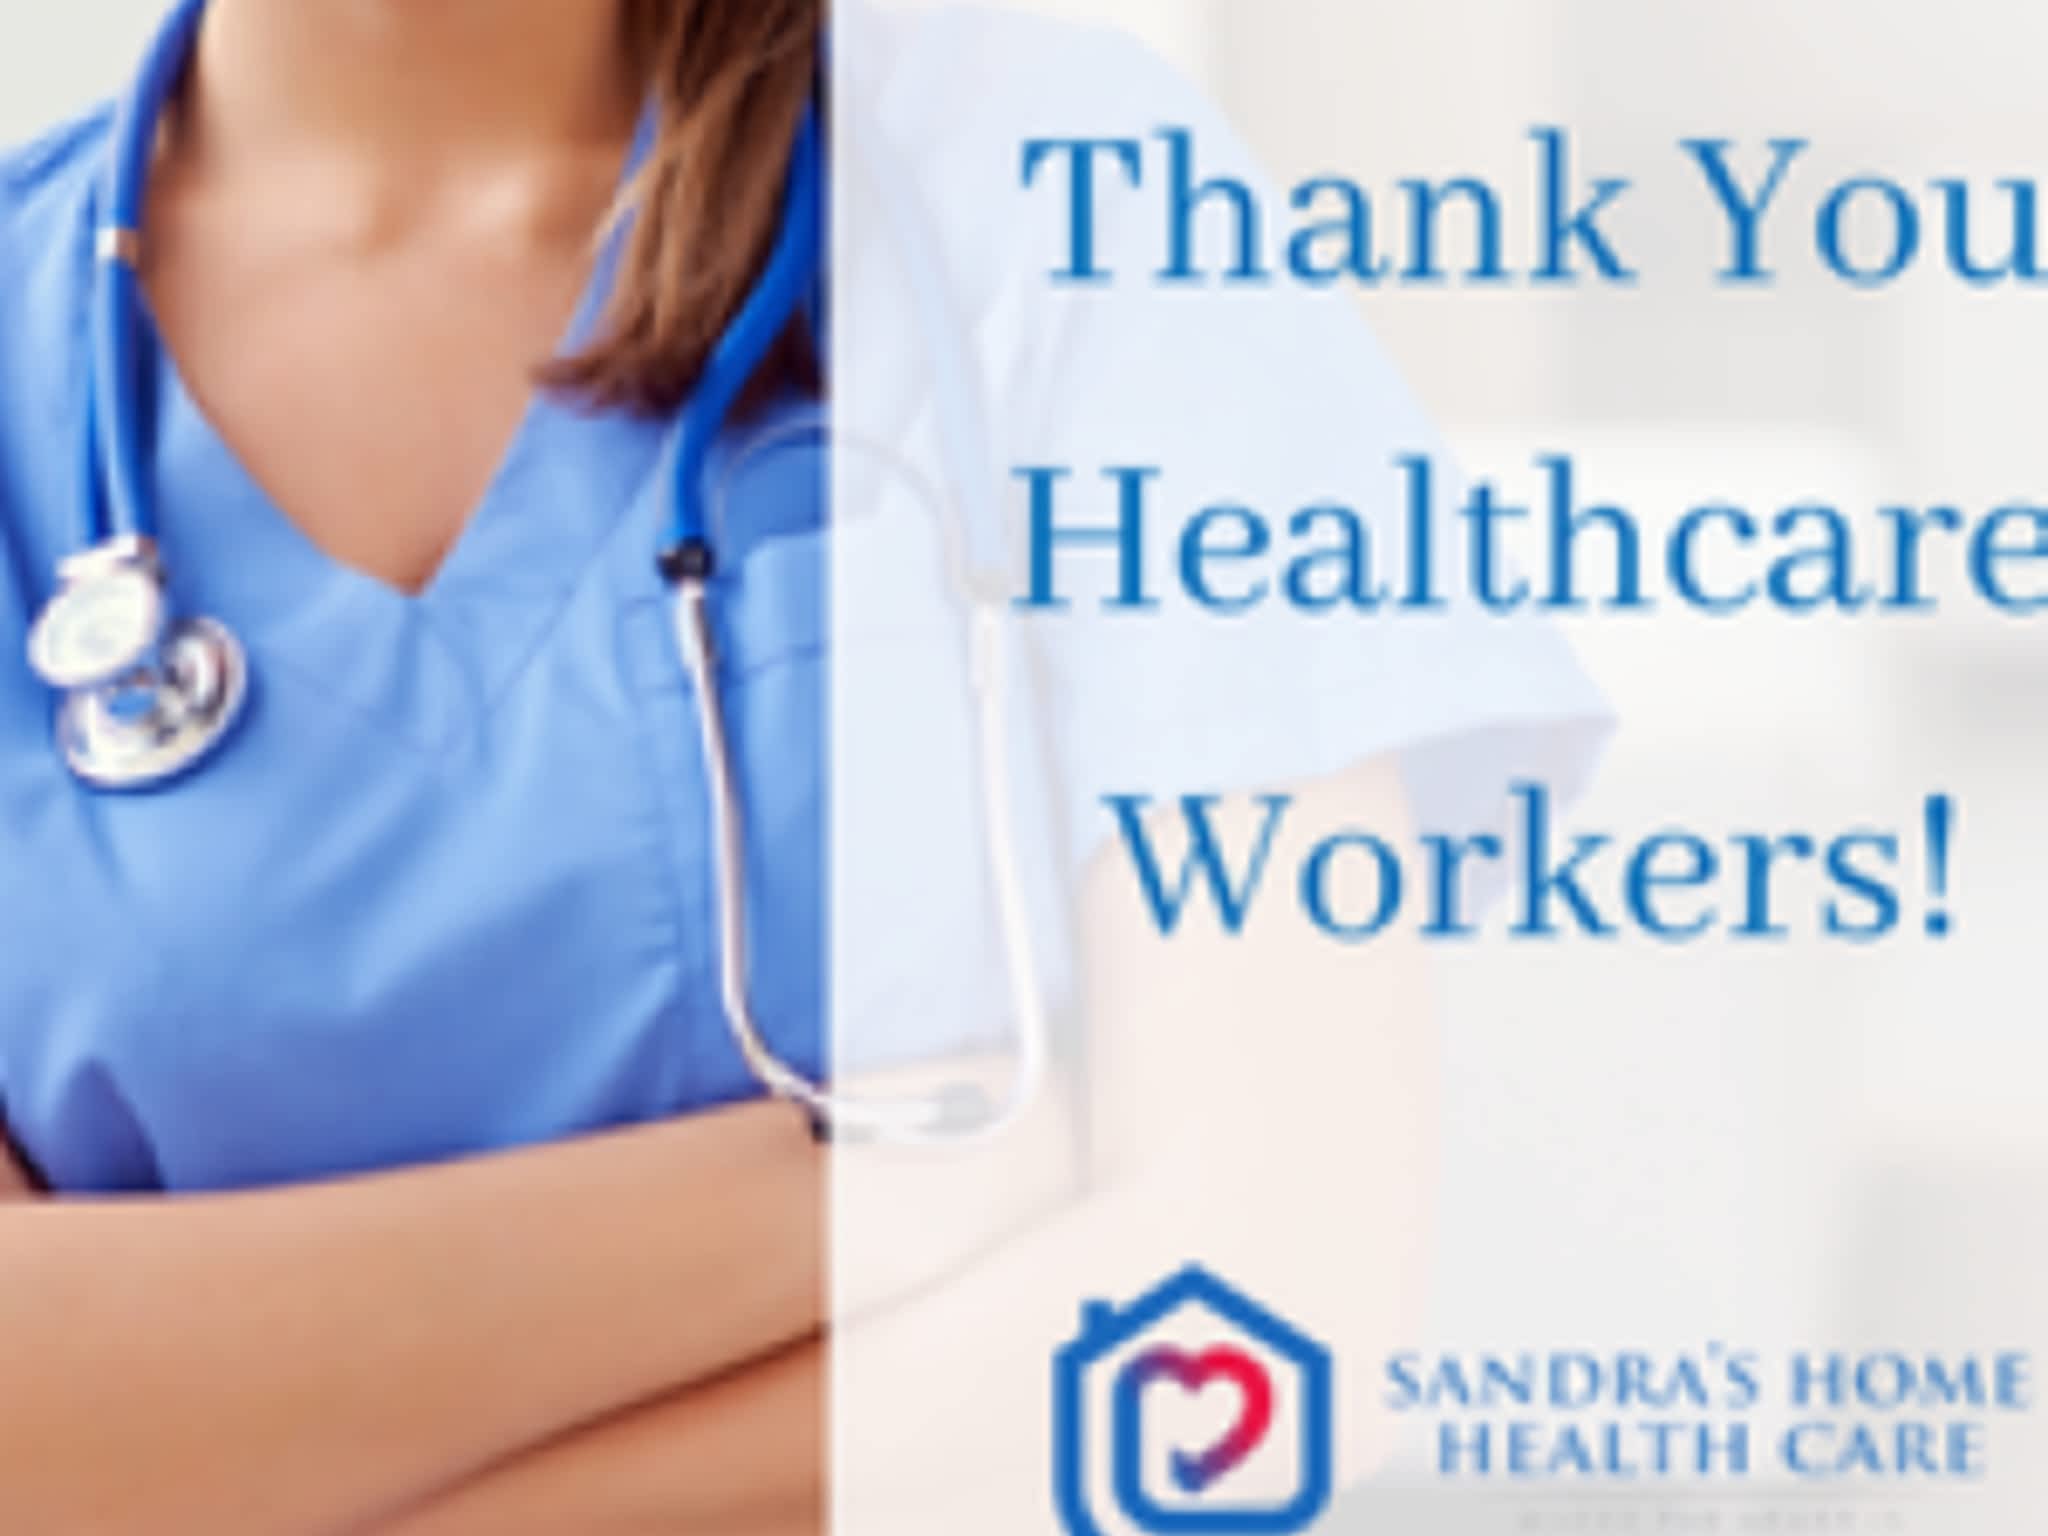 photo Sandra's Home Health Care Services Inc